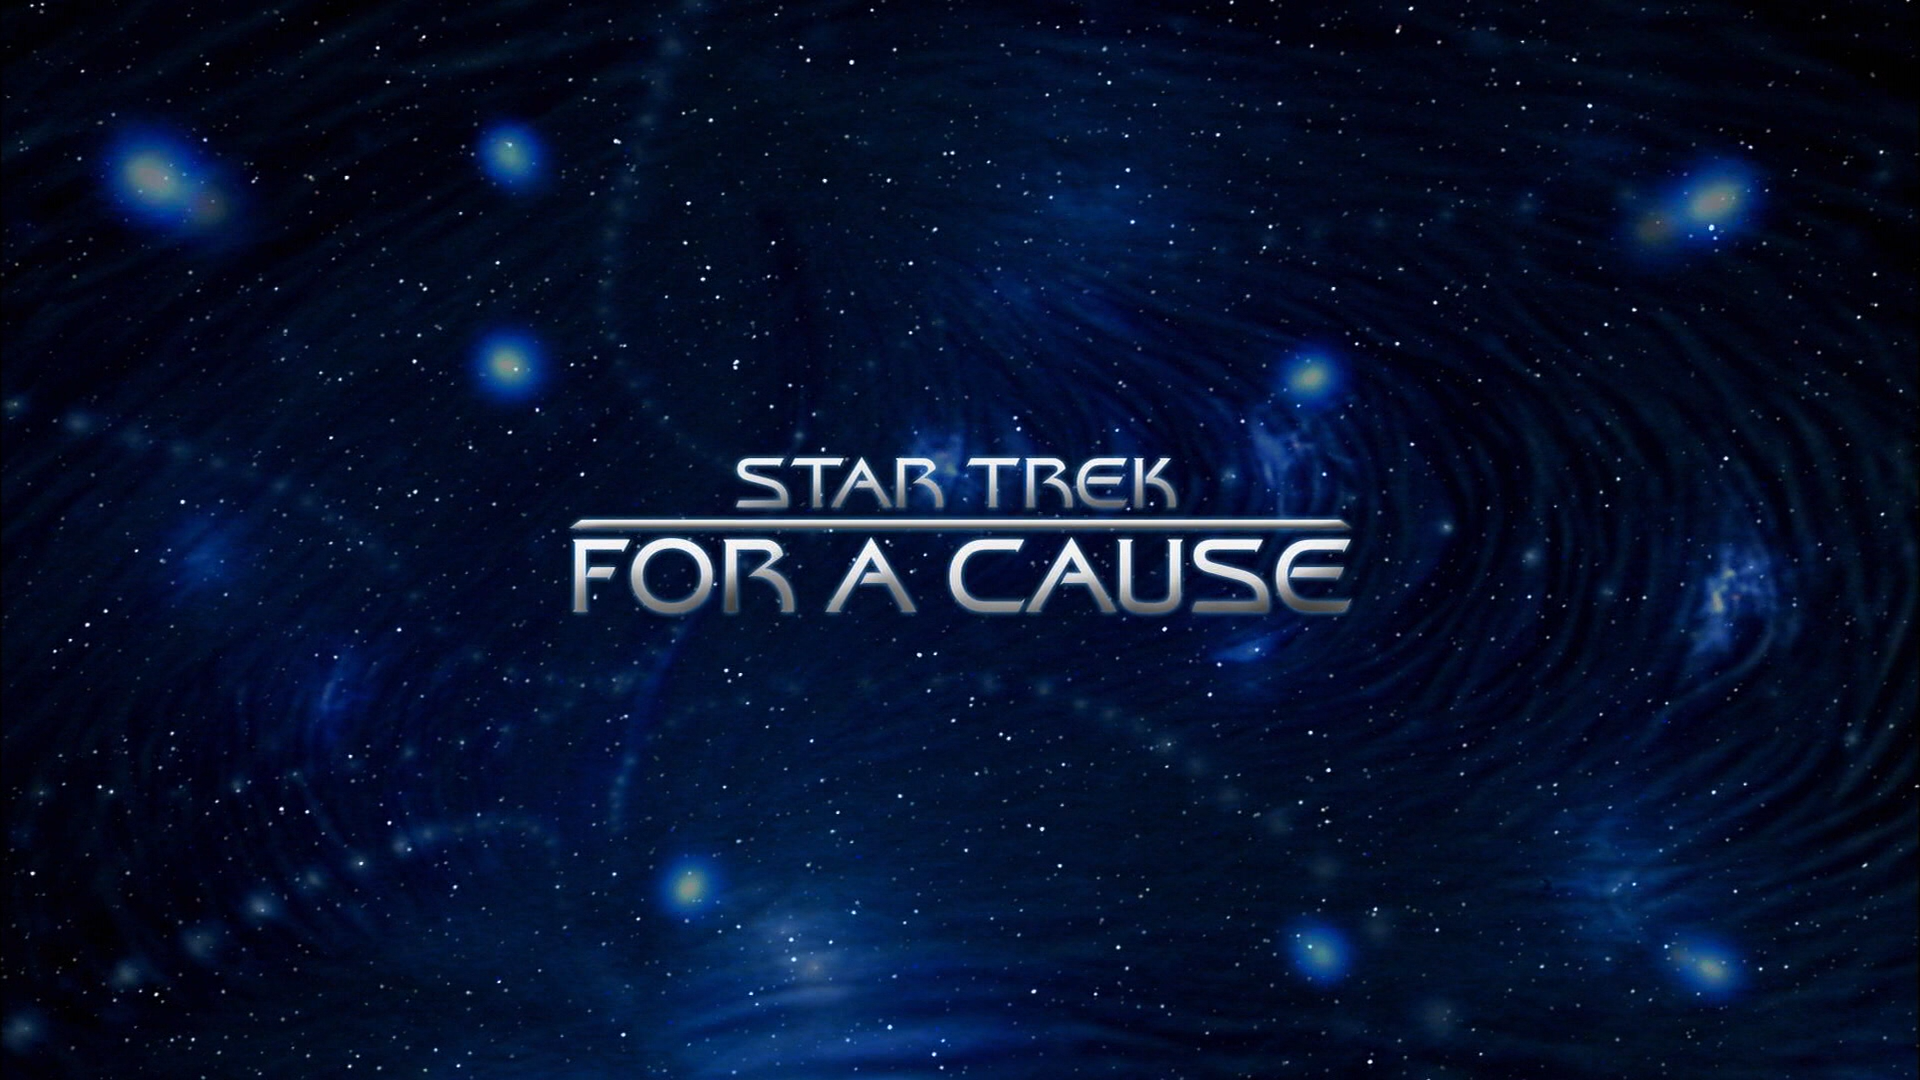 "Star Trek for a Cause" featurette